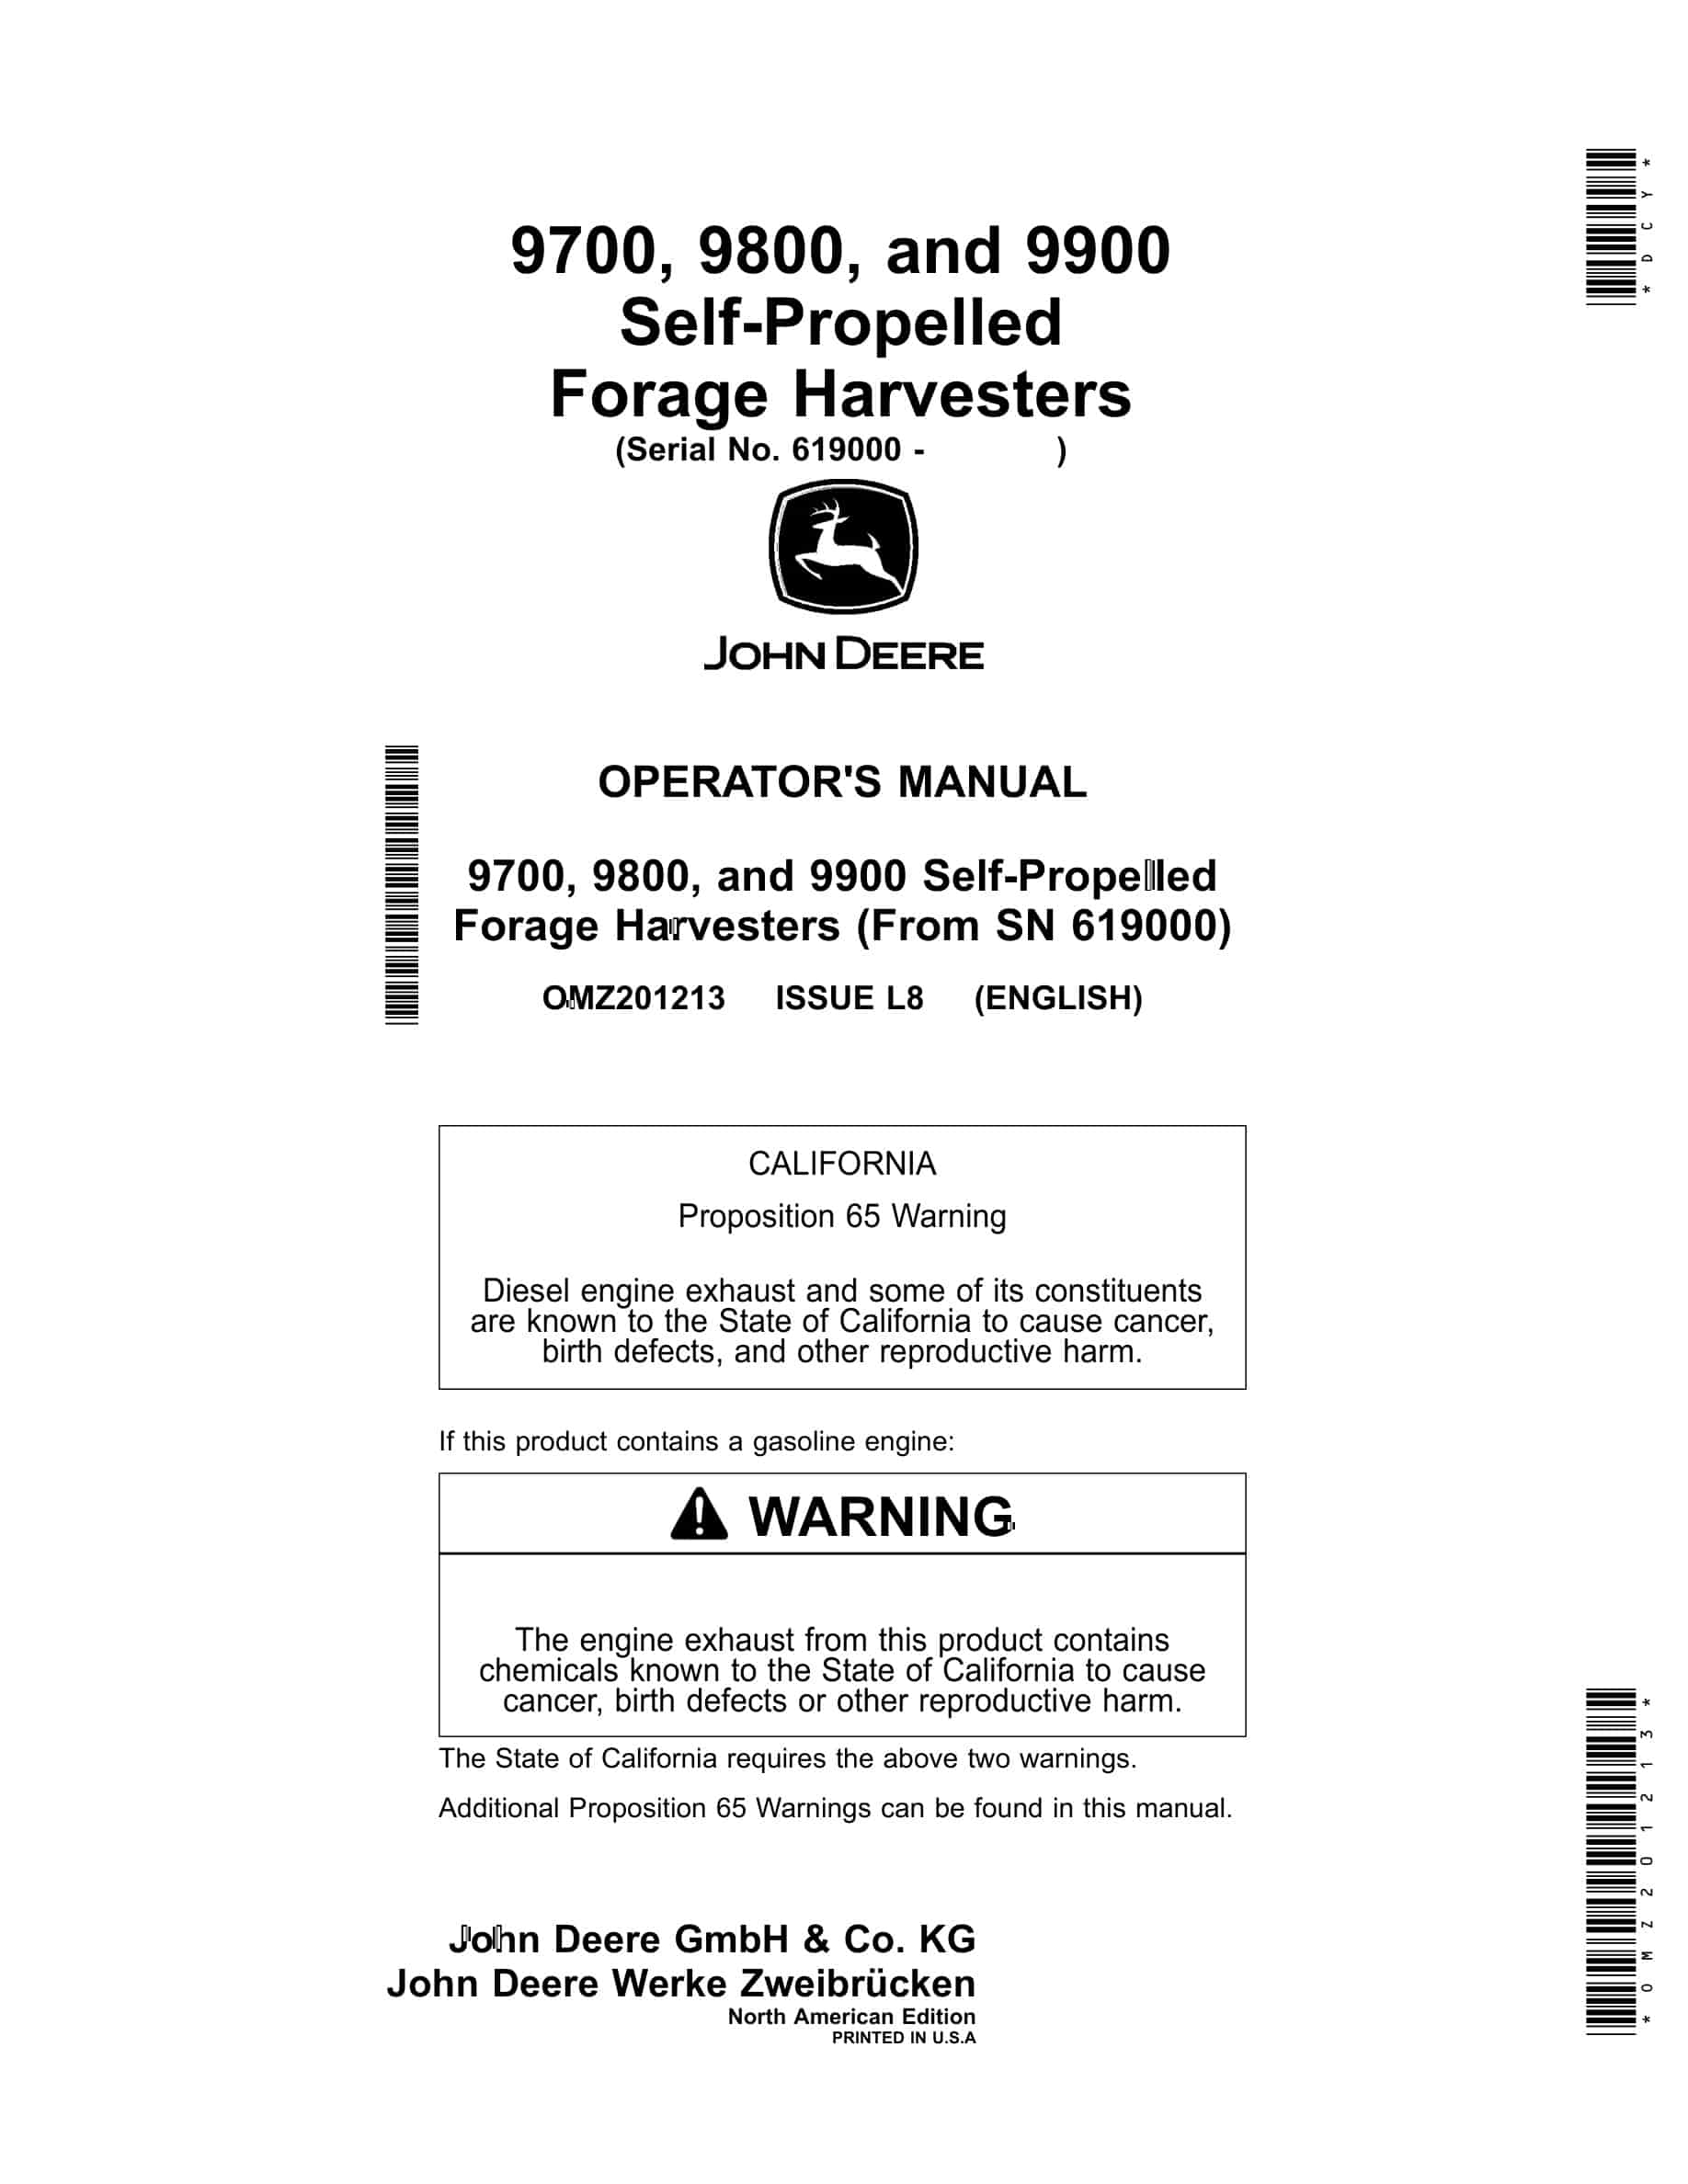 John Deere 9700, 9800, and 9900 Self-Propelled Forage Harvester Operator Manual OMZ201213-1